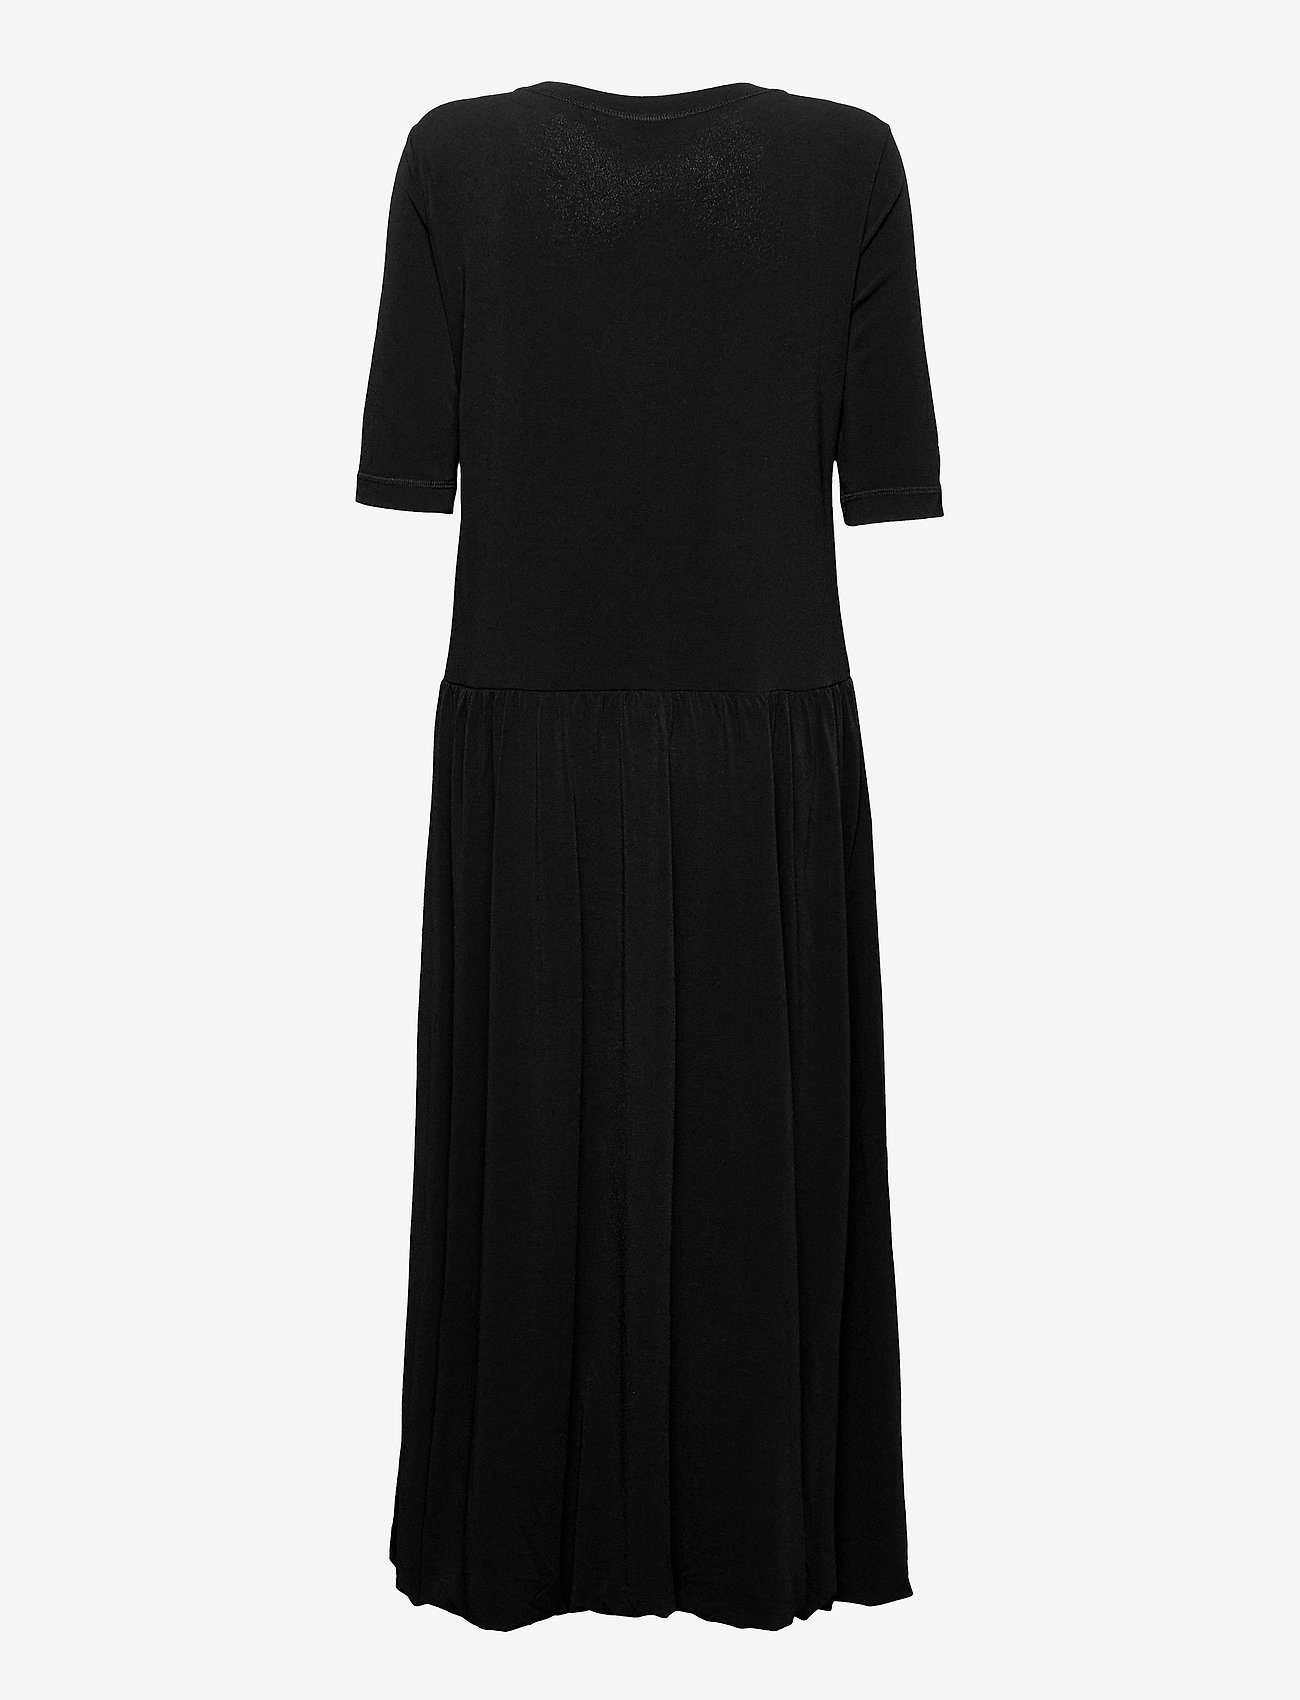 InWear - BenIW Dress - t-skjortekjoler - black - 1